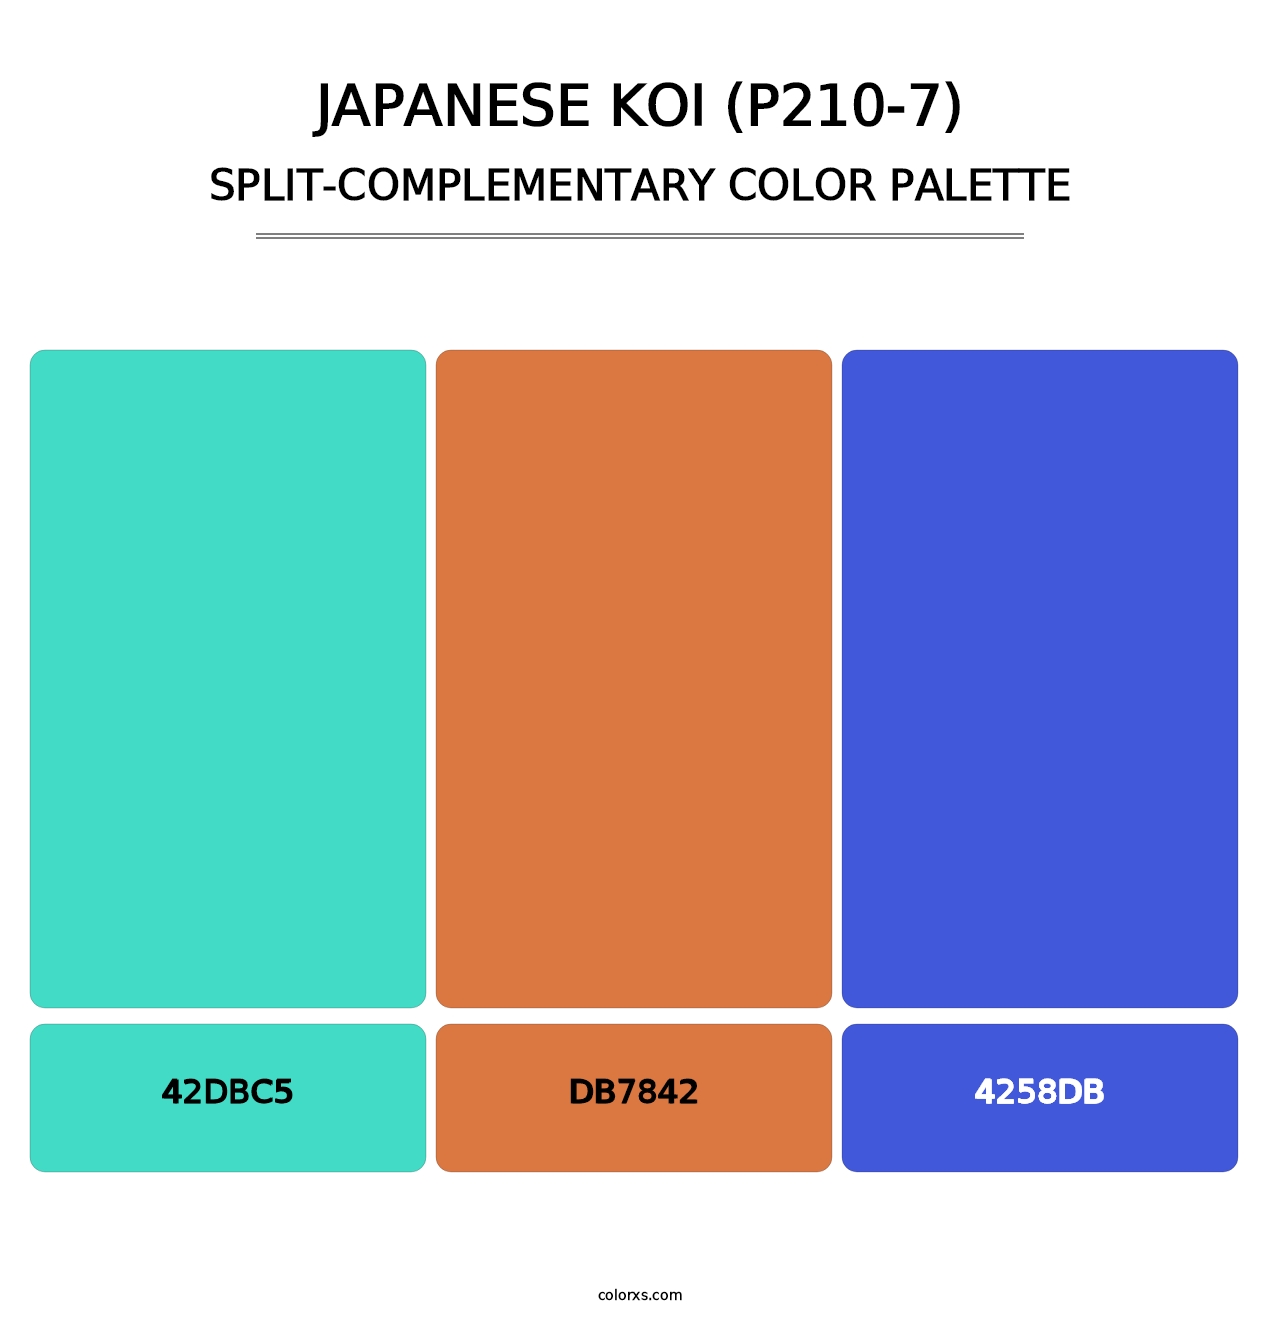 Japanese Koi (P210-7) - Split-Complementary Color Palette